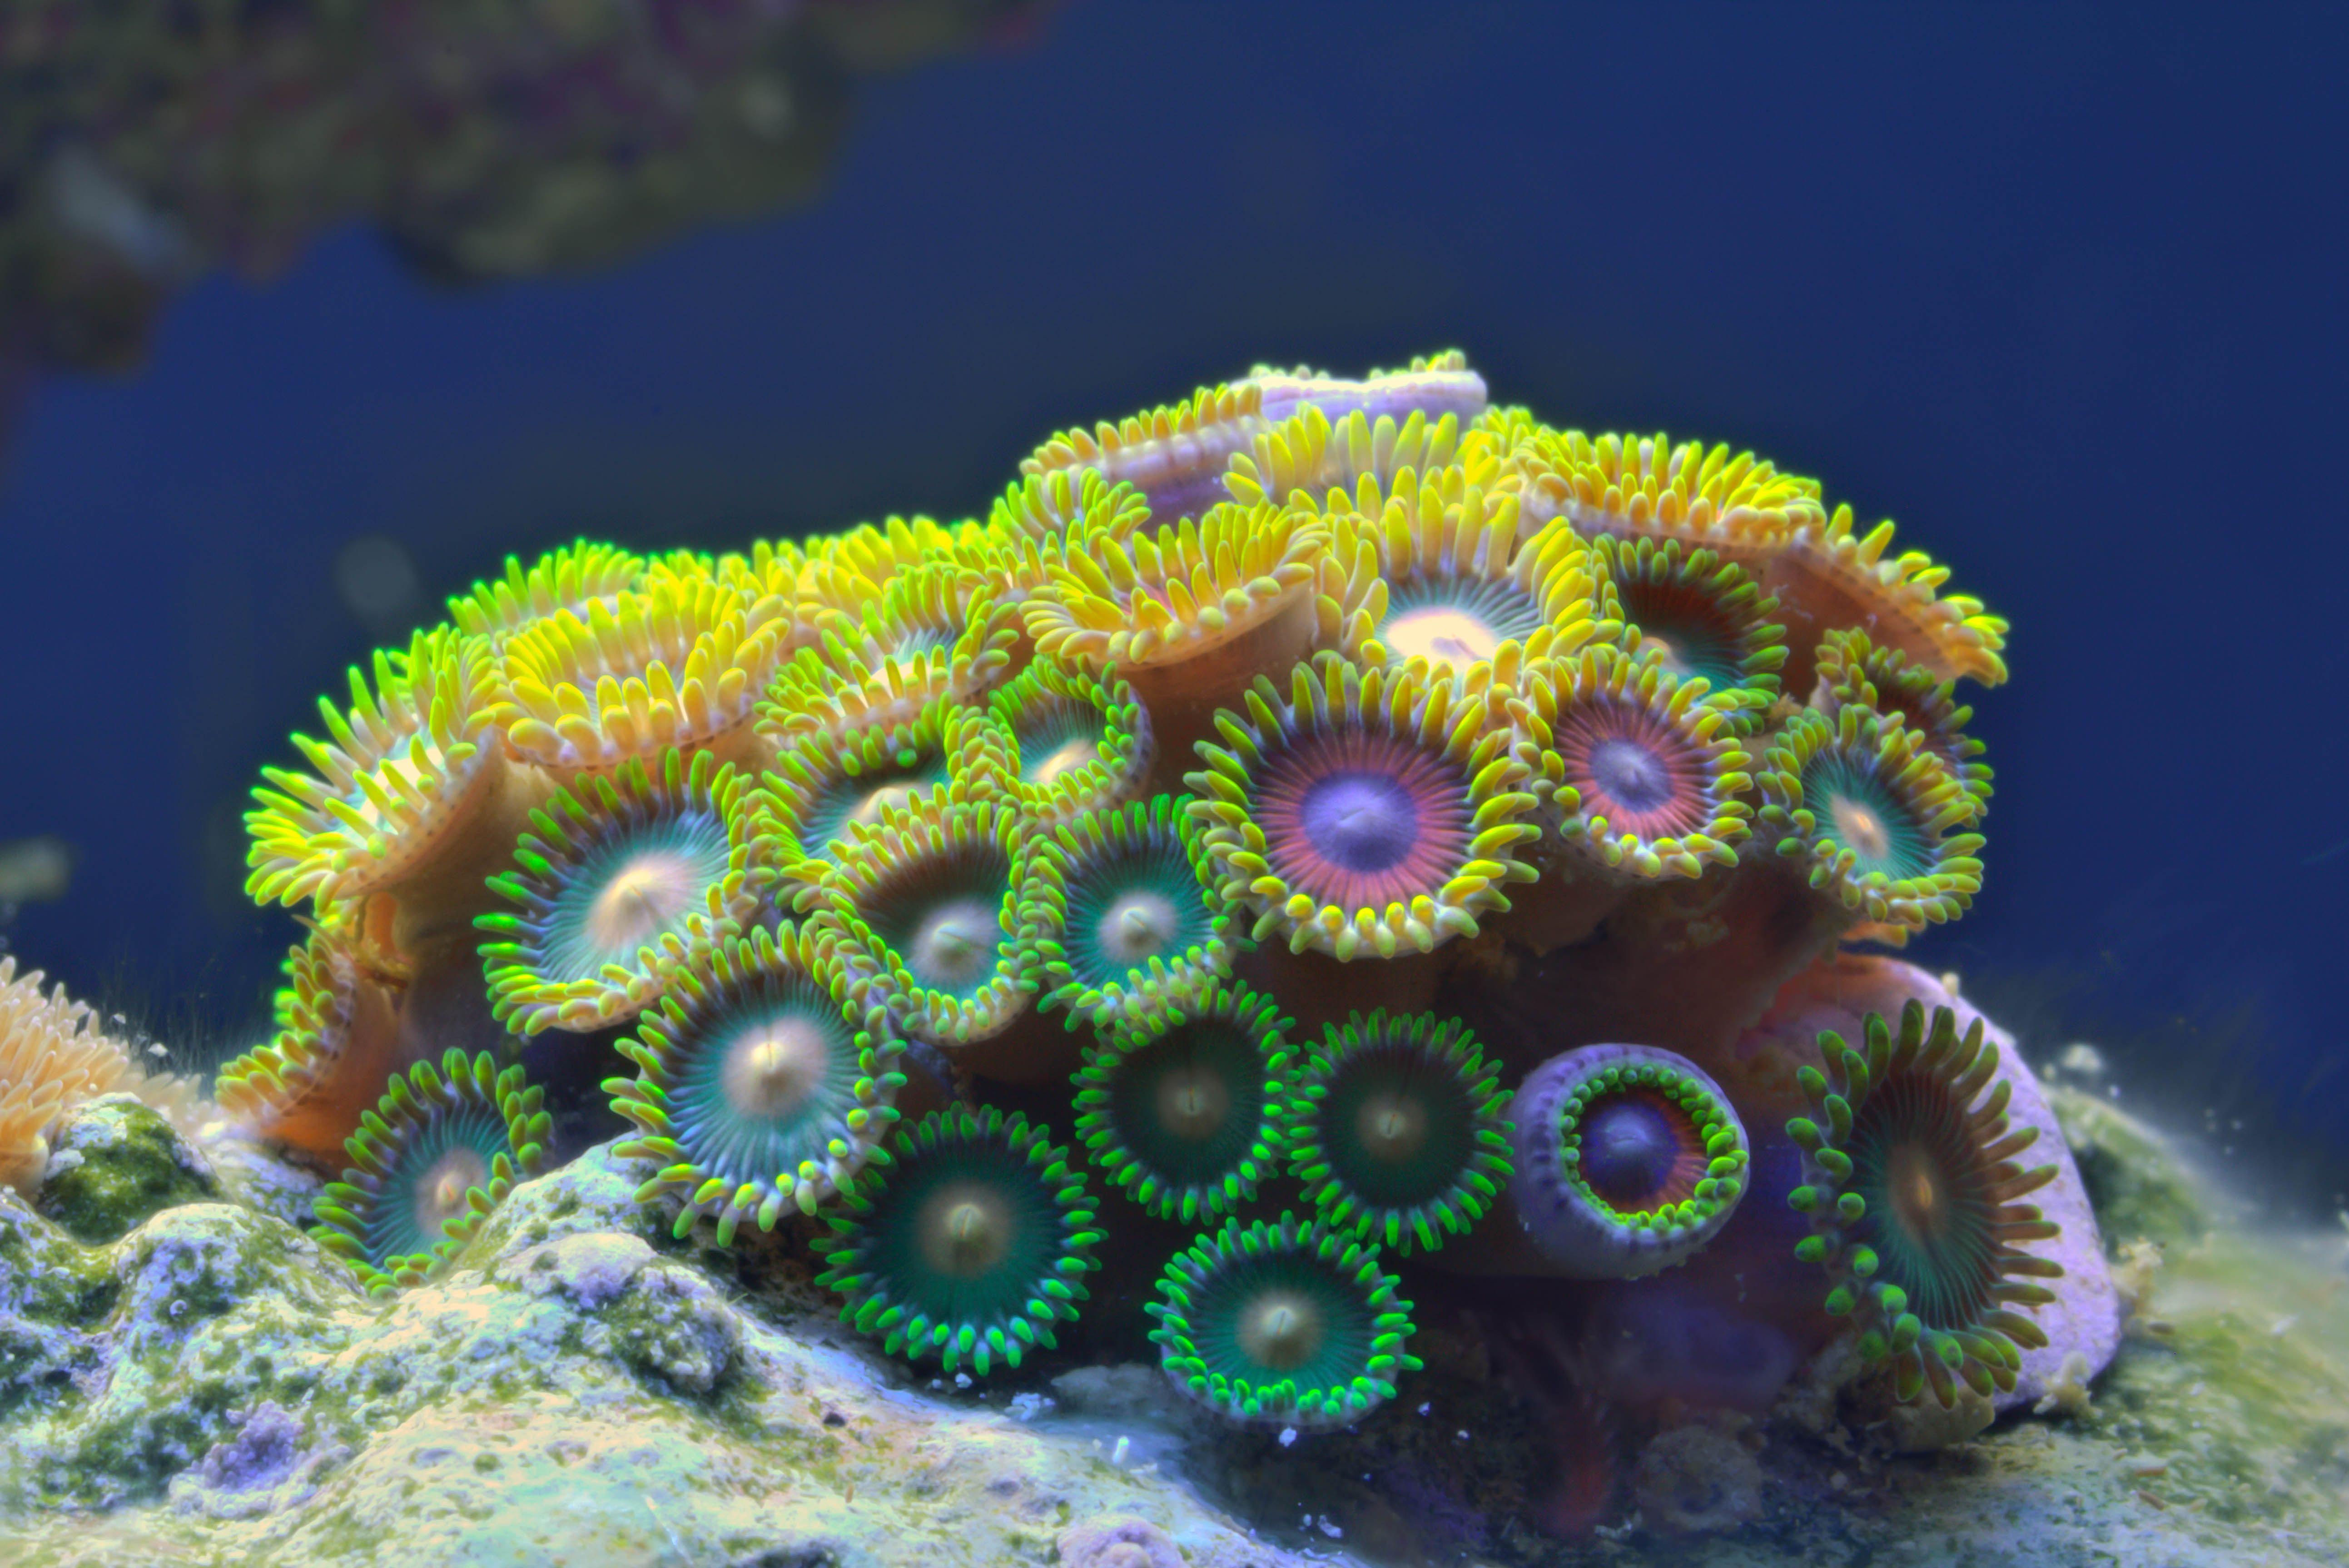 Coral video. Шестилучевые коралловые полипы. Зоантусы могикан. Коралловый полип Зоантарии. Агава зоантусы.